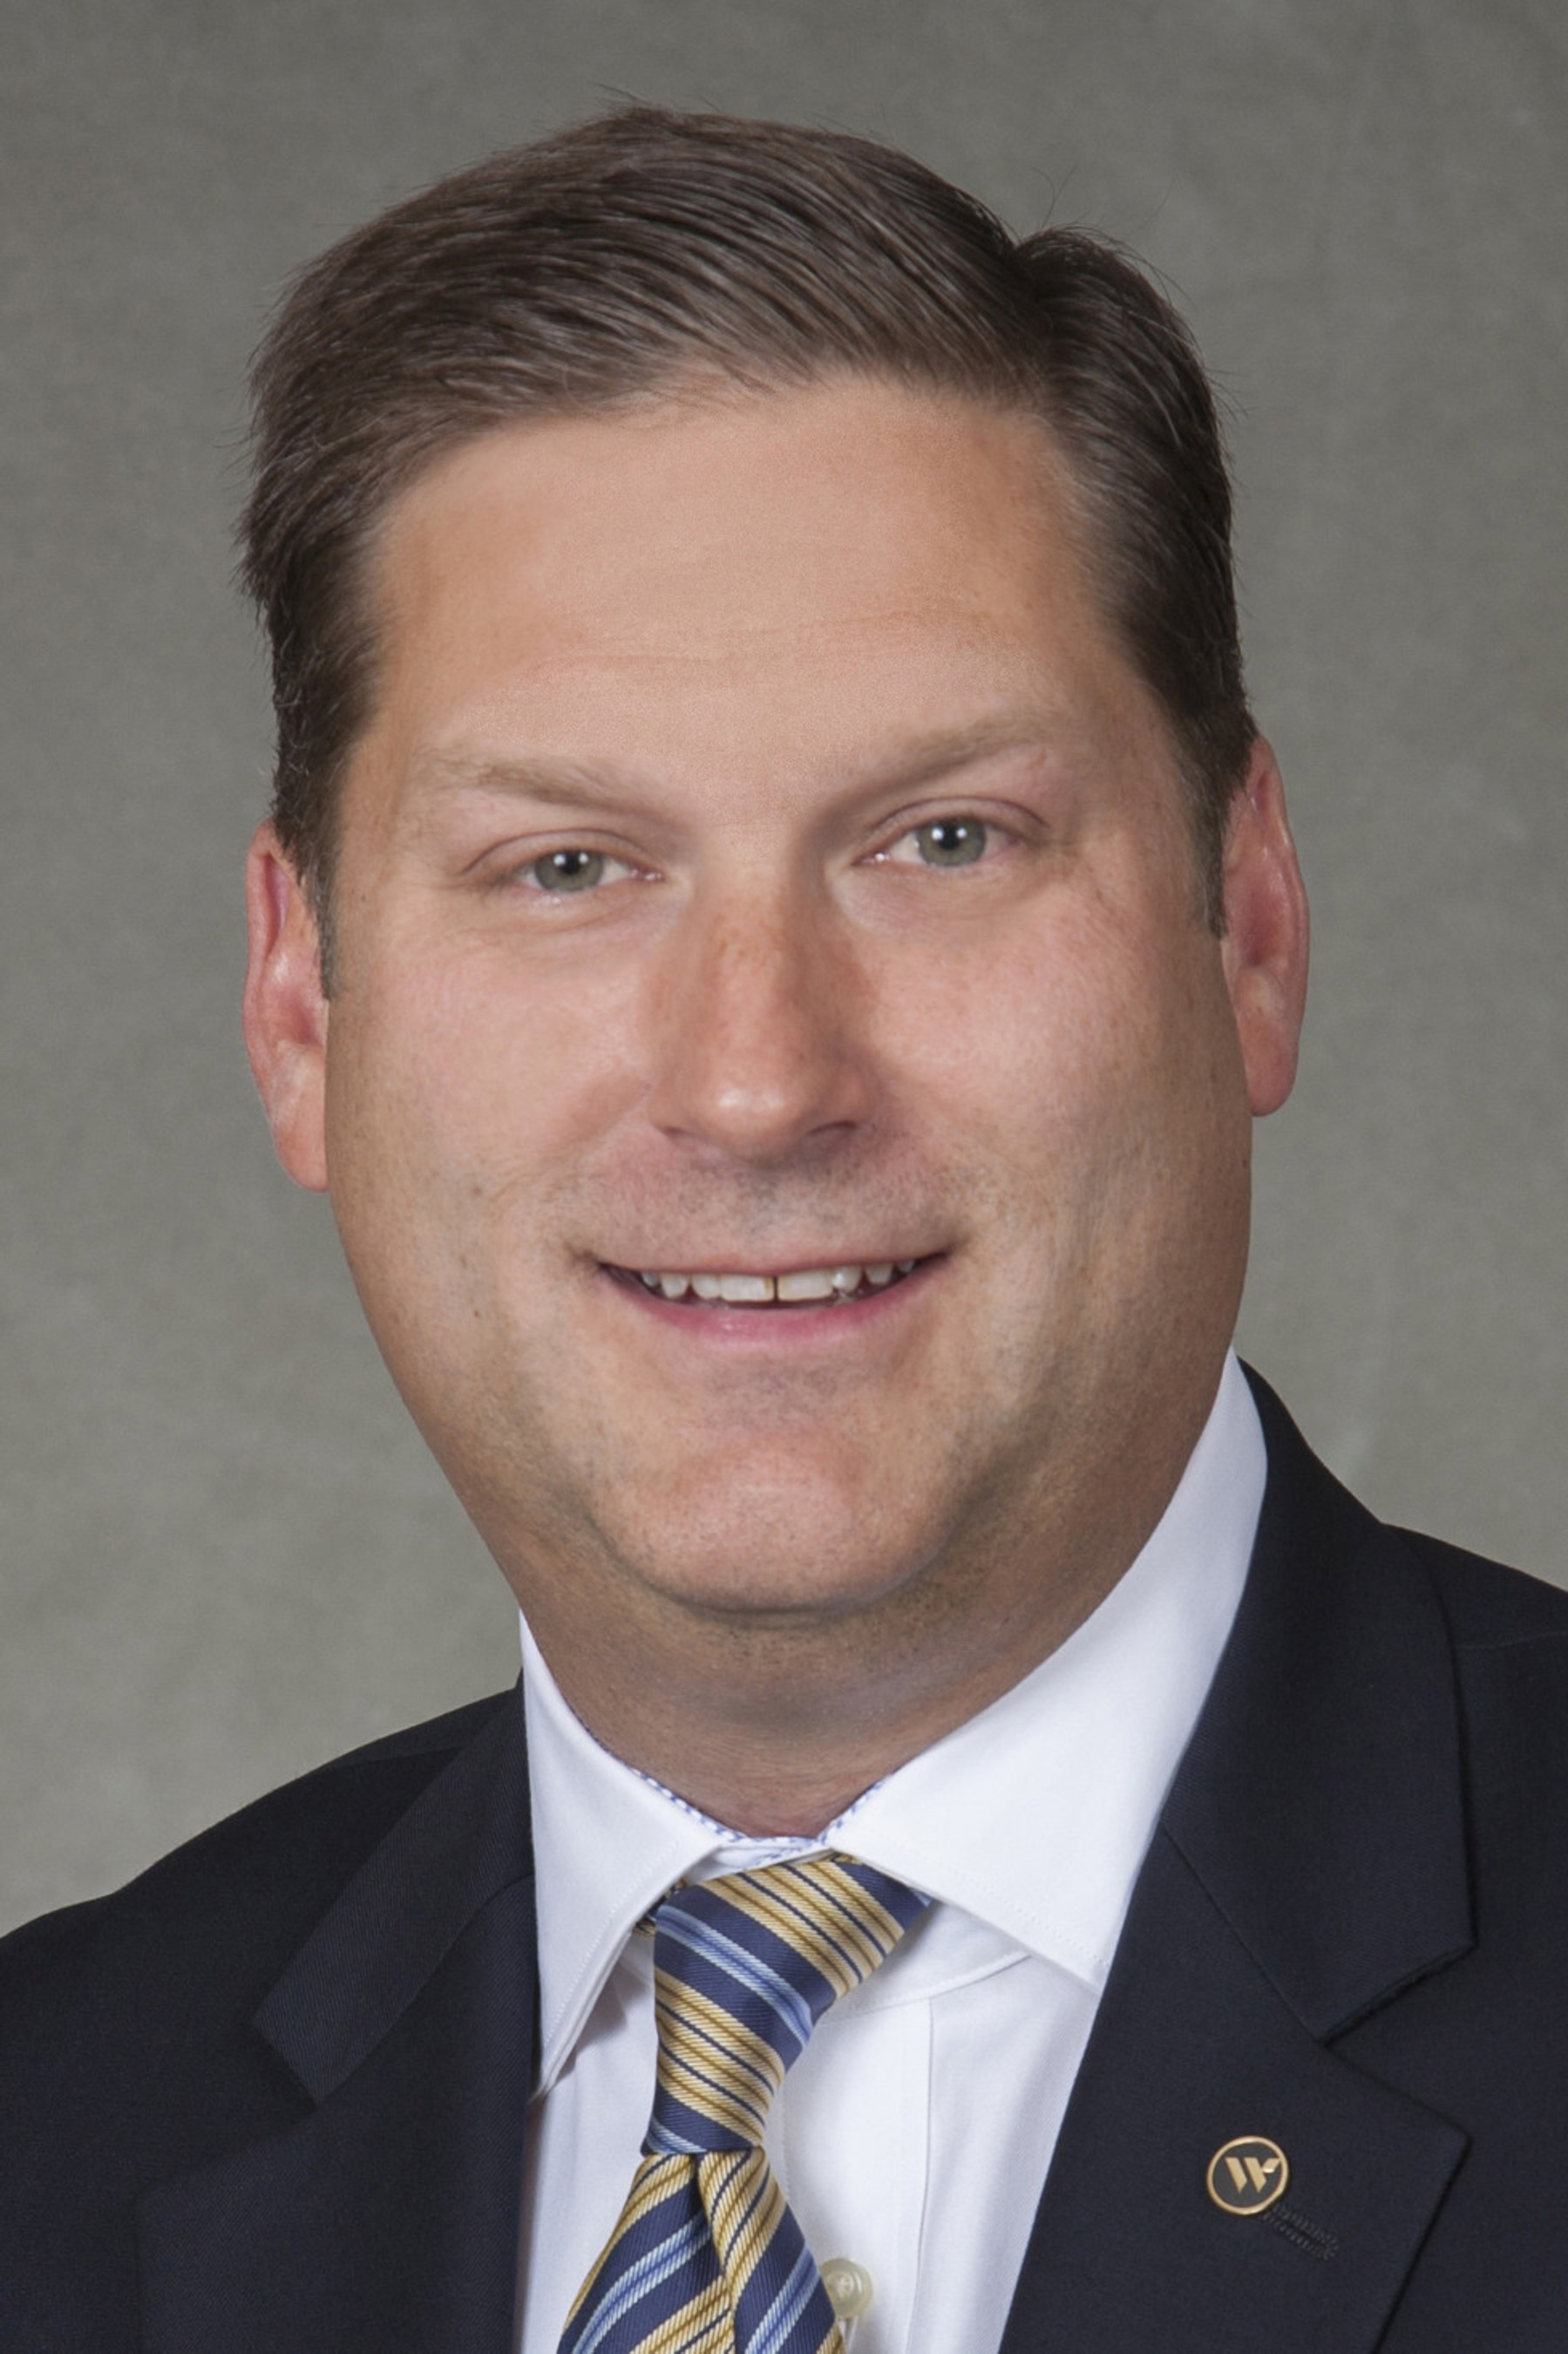 Christopher Motl named executive vice president, middle market banking at Webster Bank